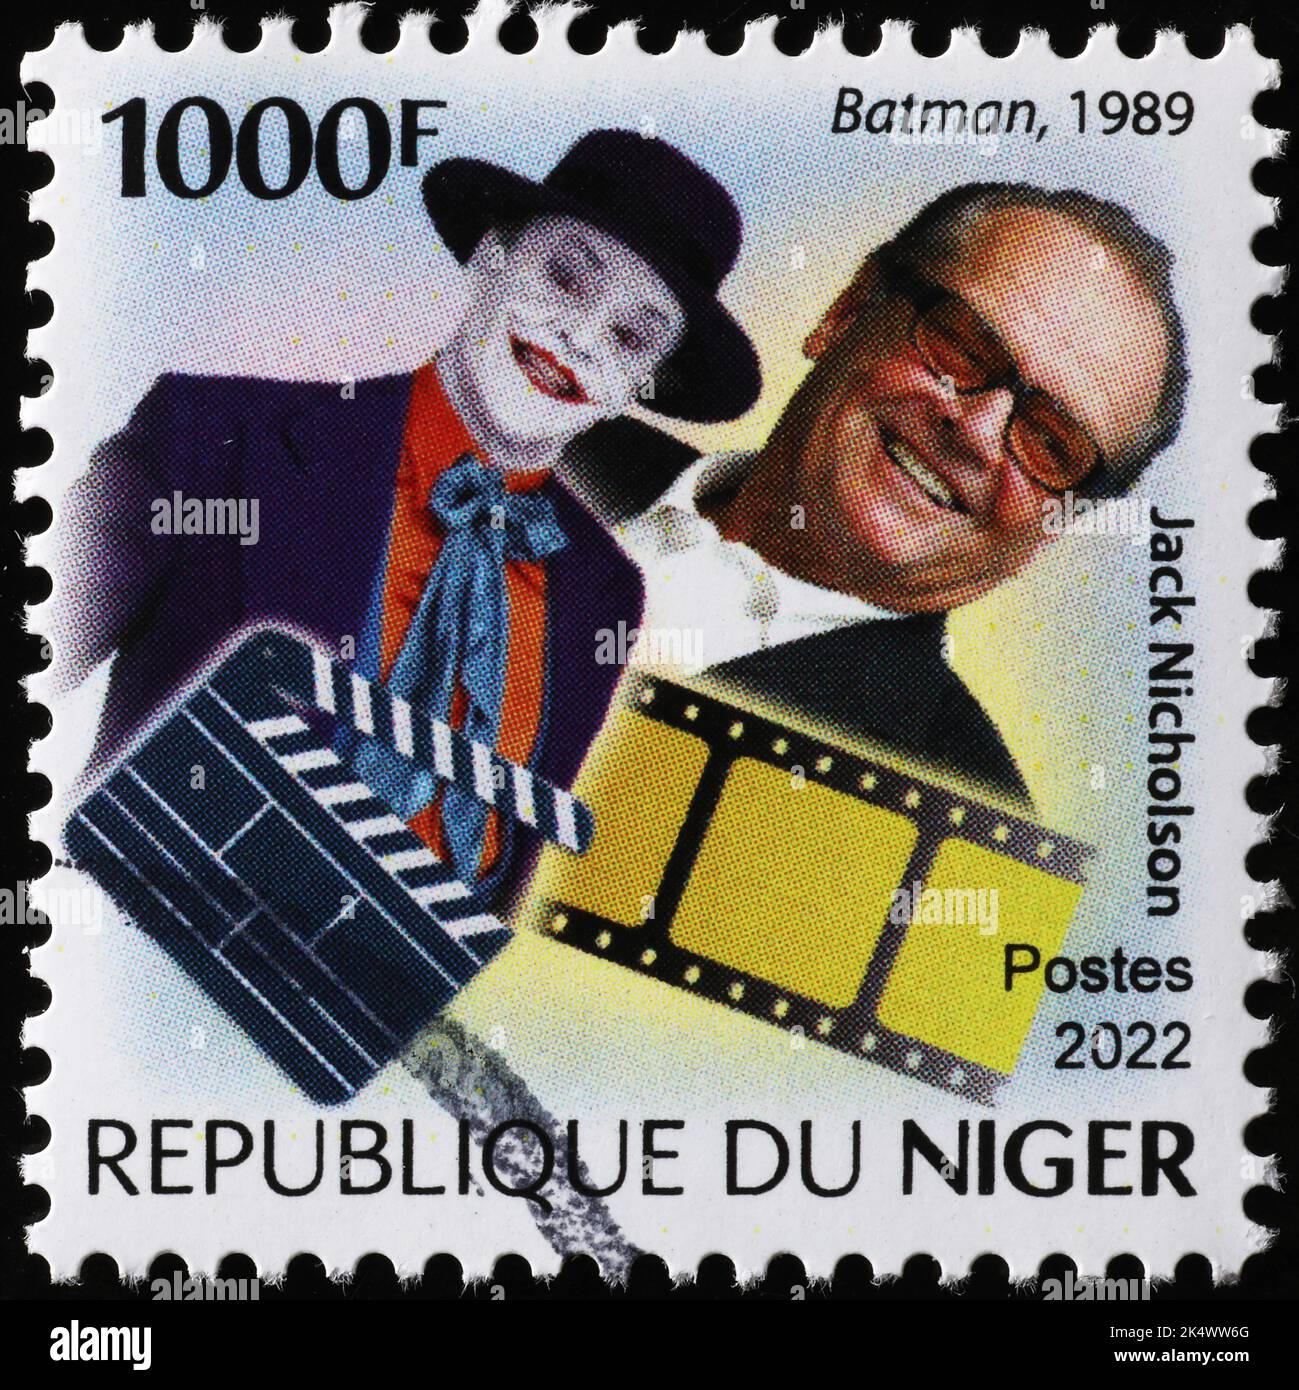 Jack Nicholson as the Joker on postage stamp Stock Photo